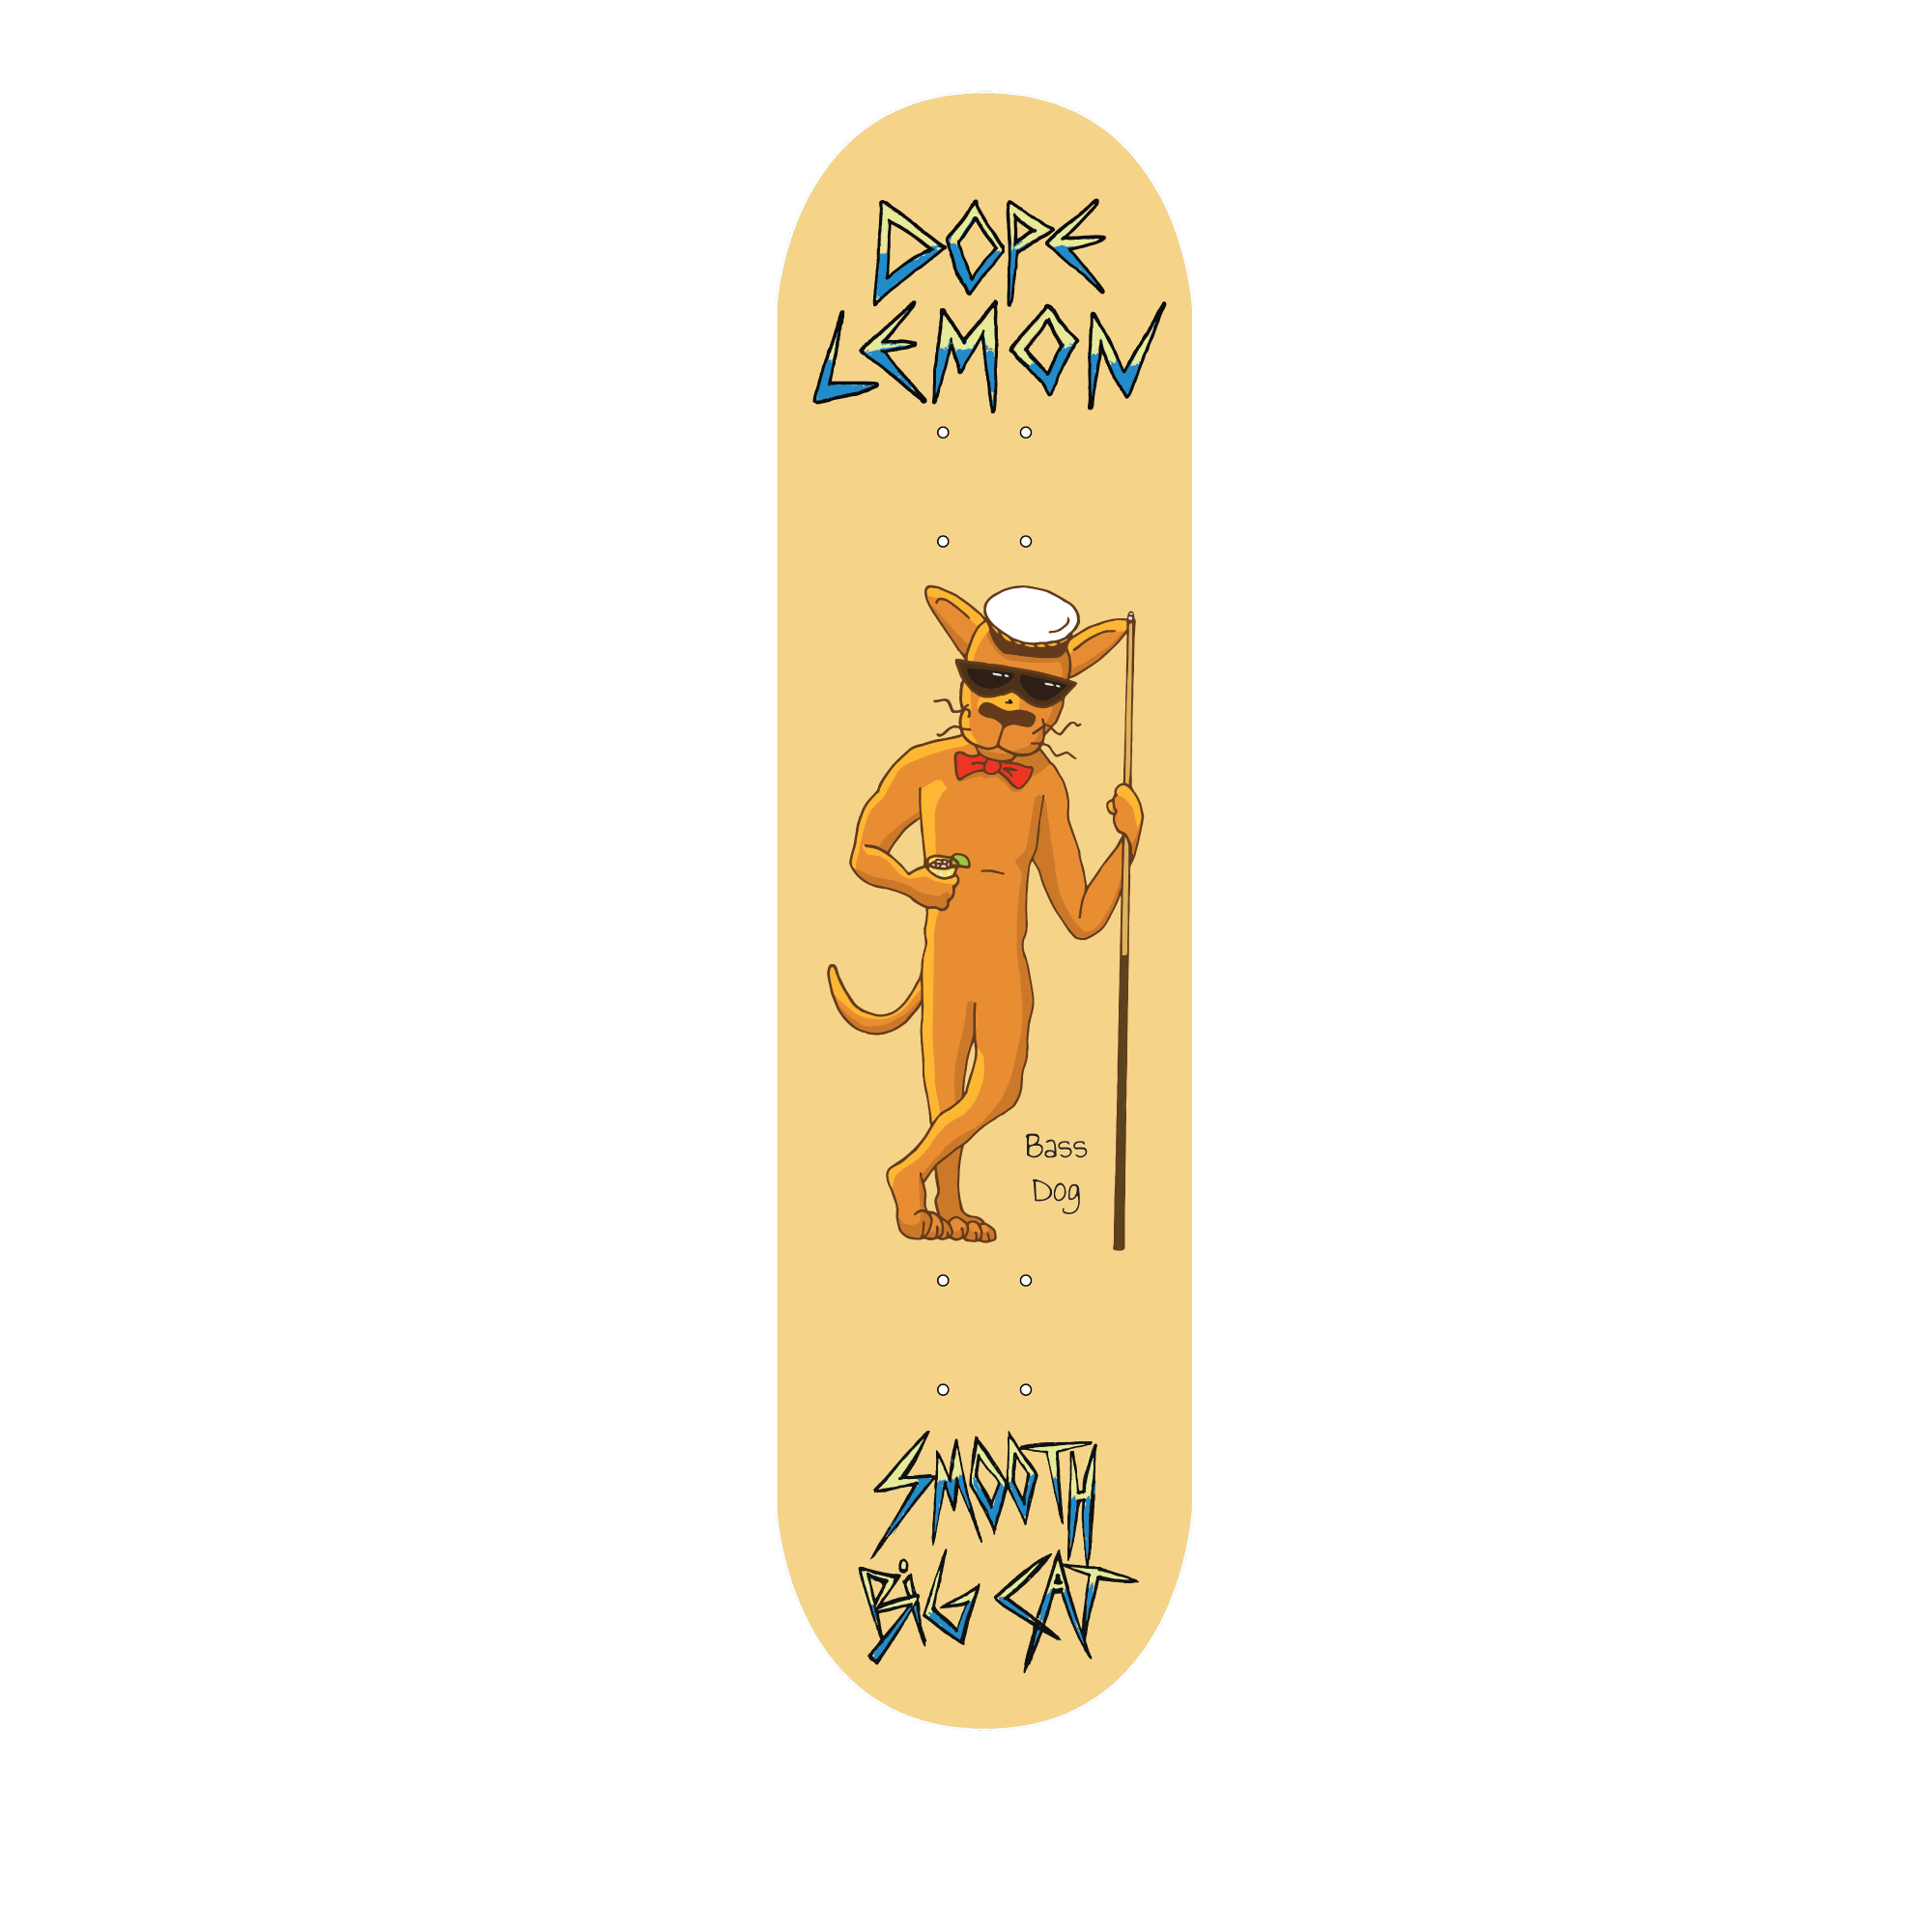 Bass Dog / Skate Deck